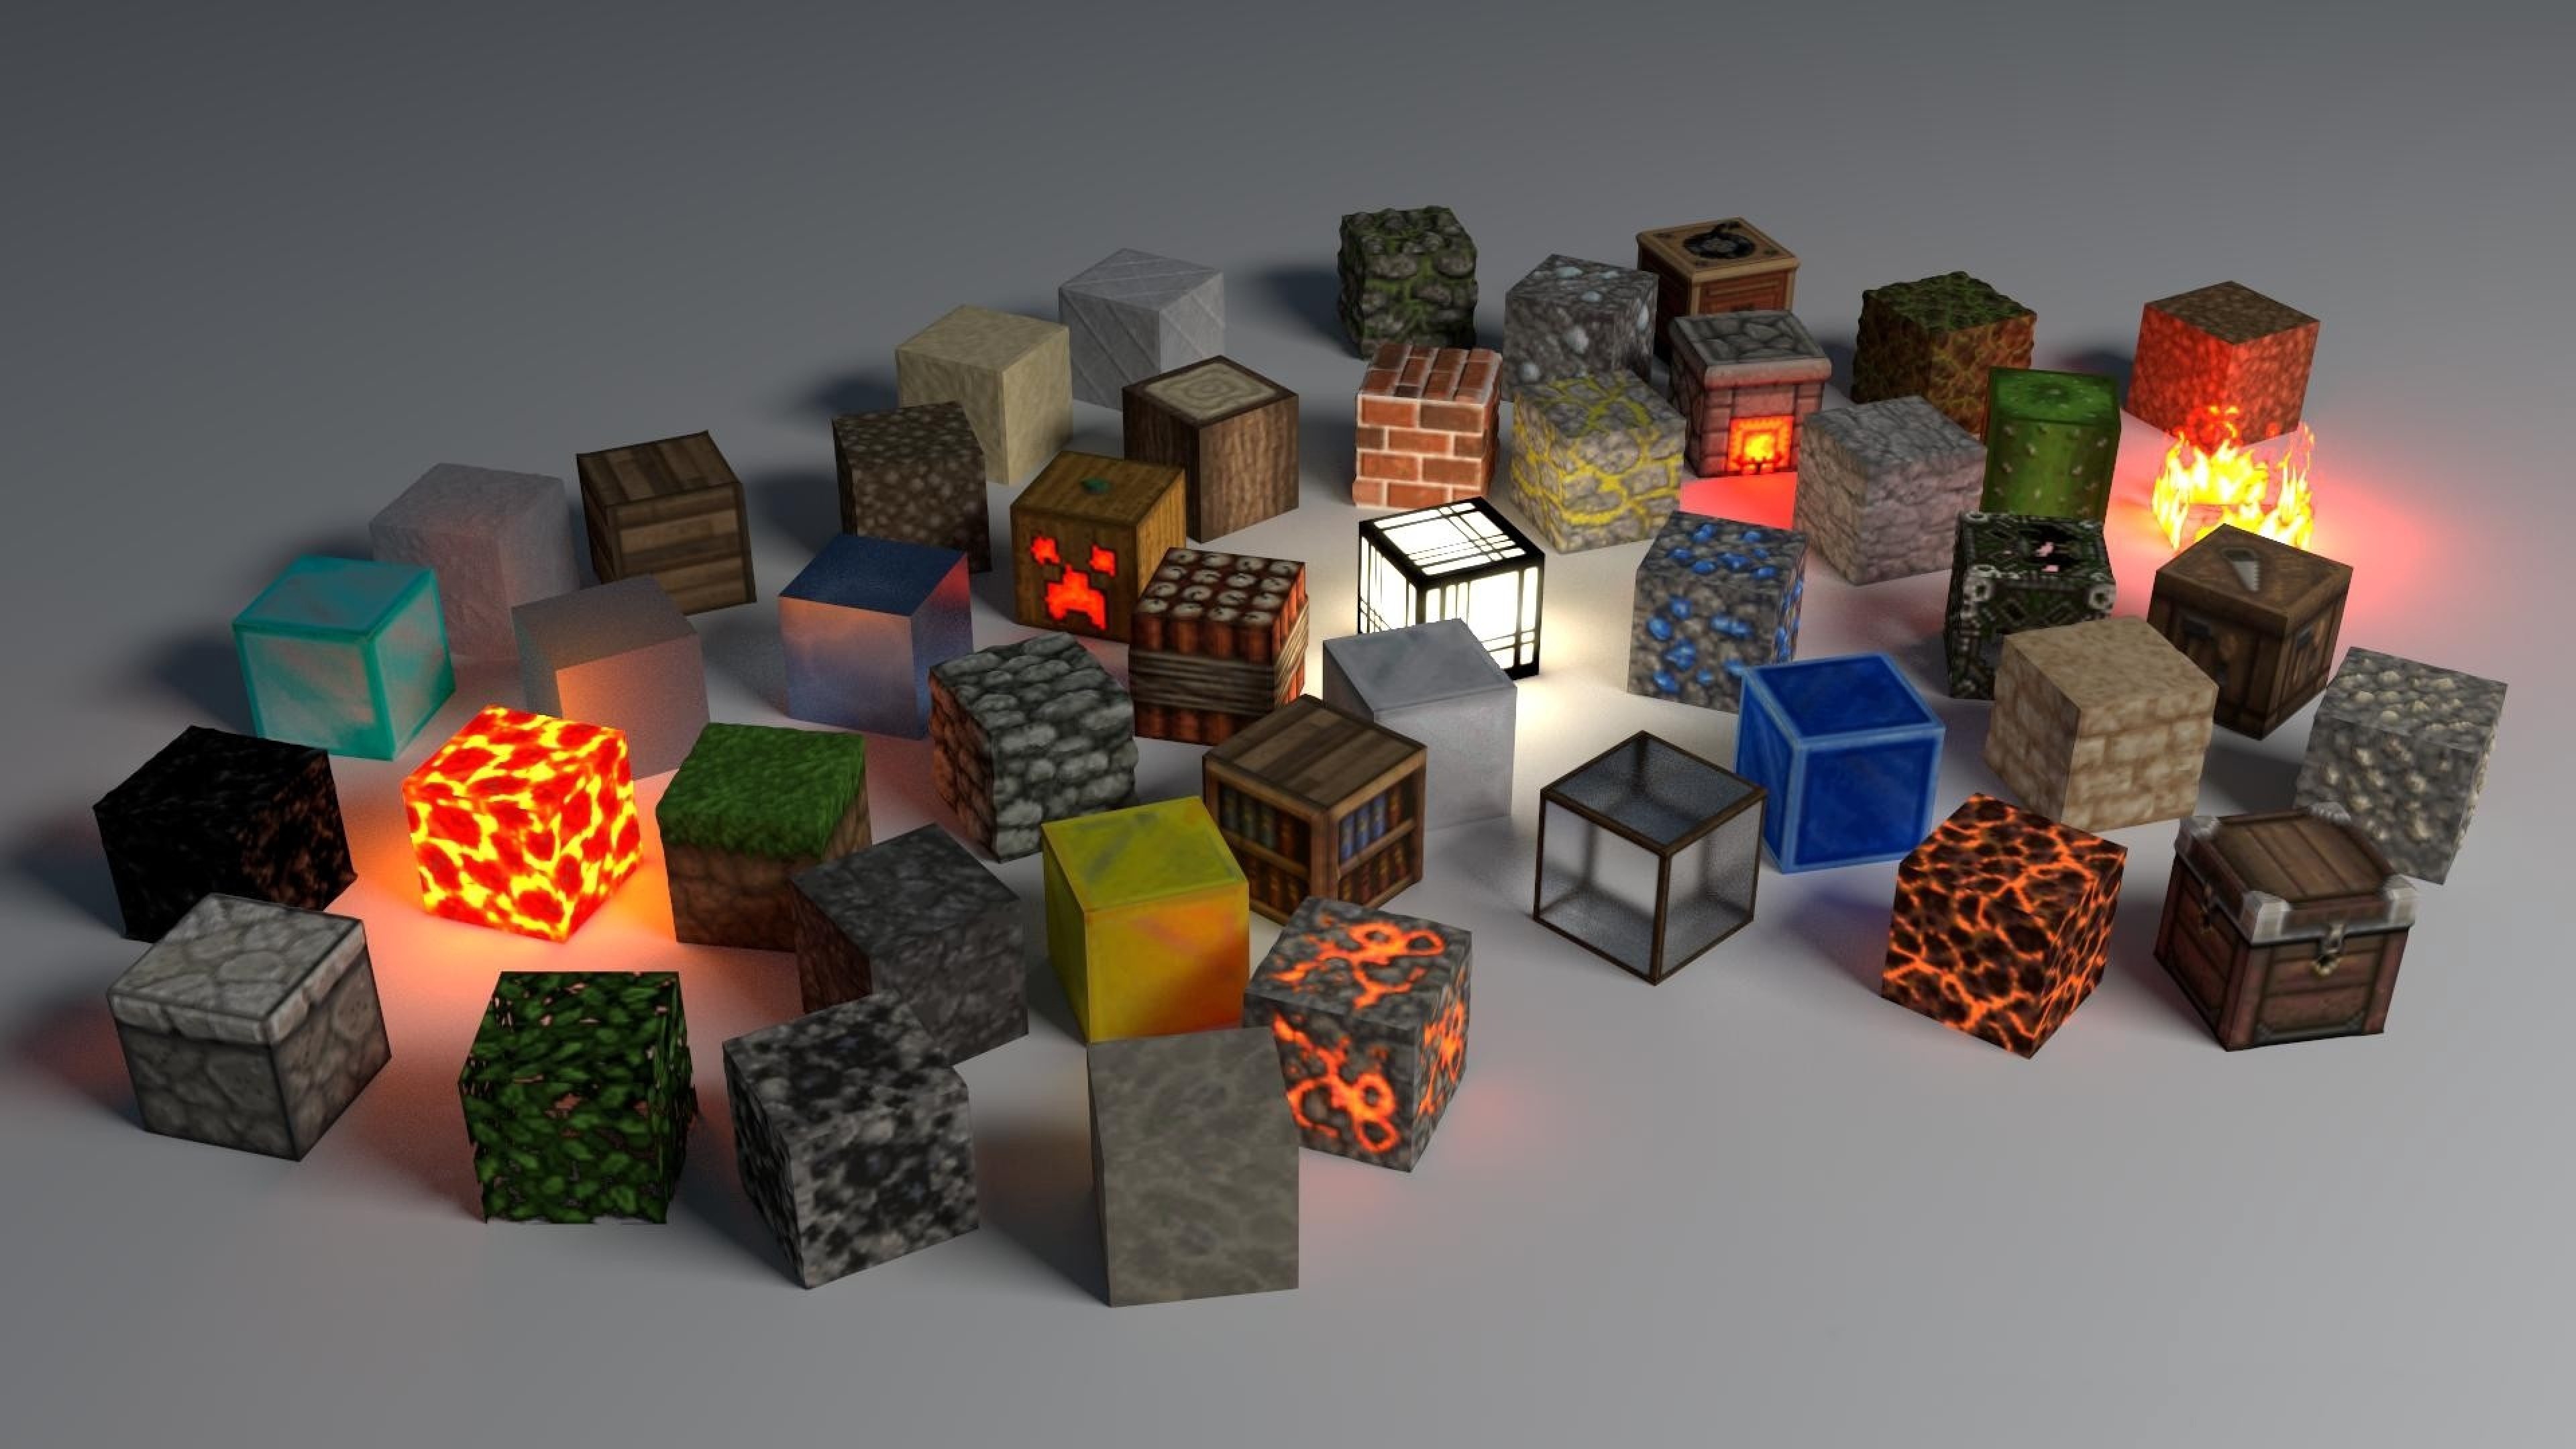 More cubes